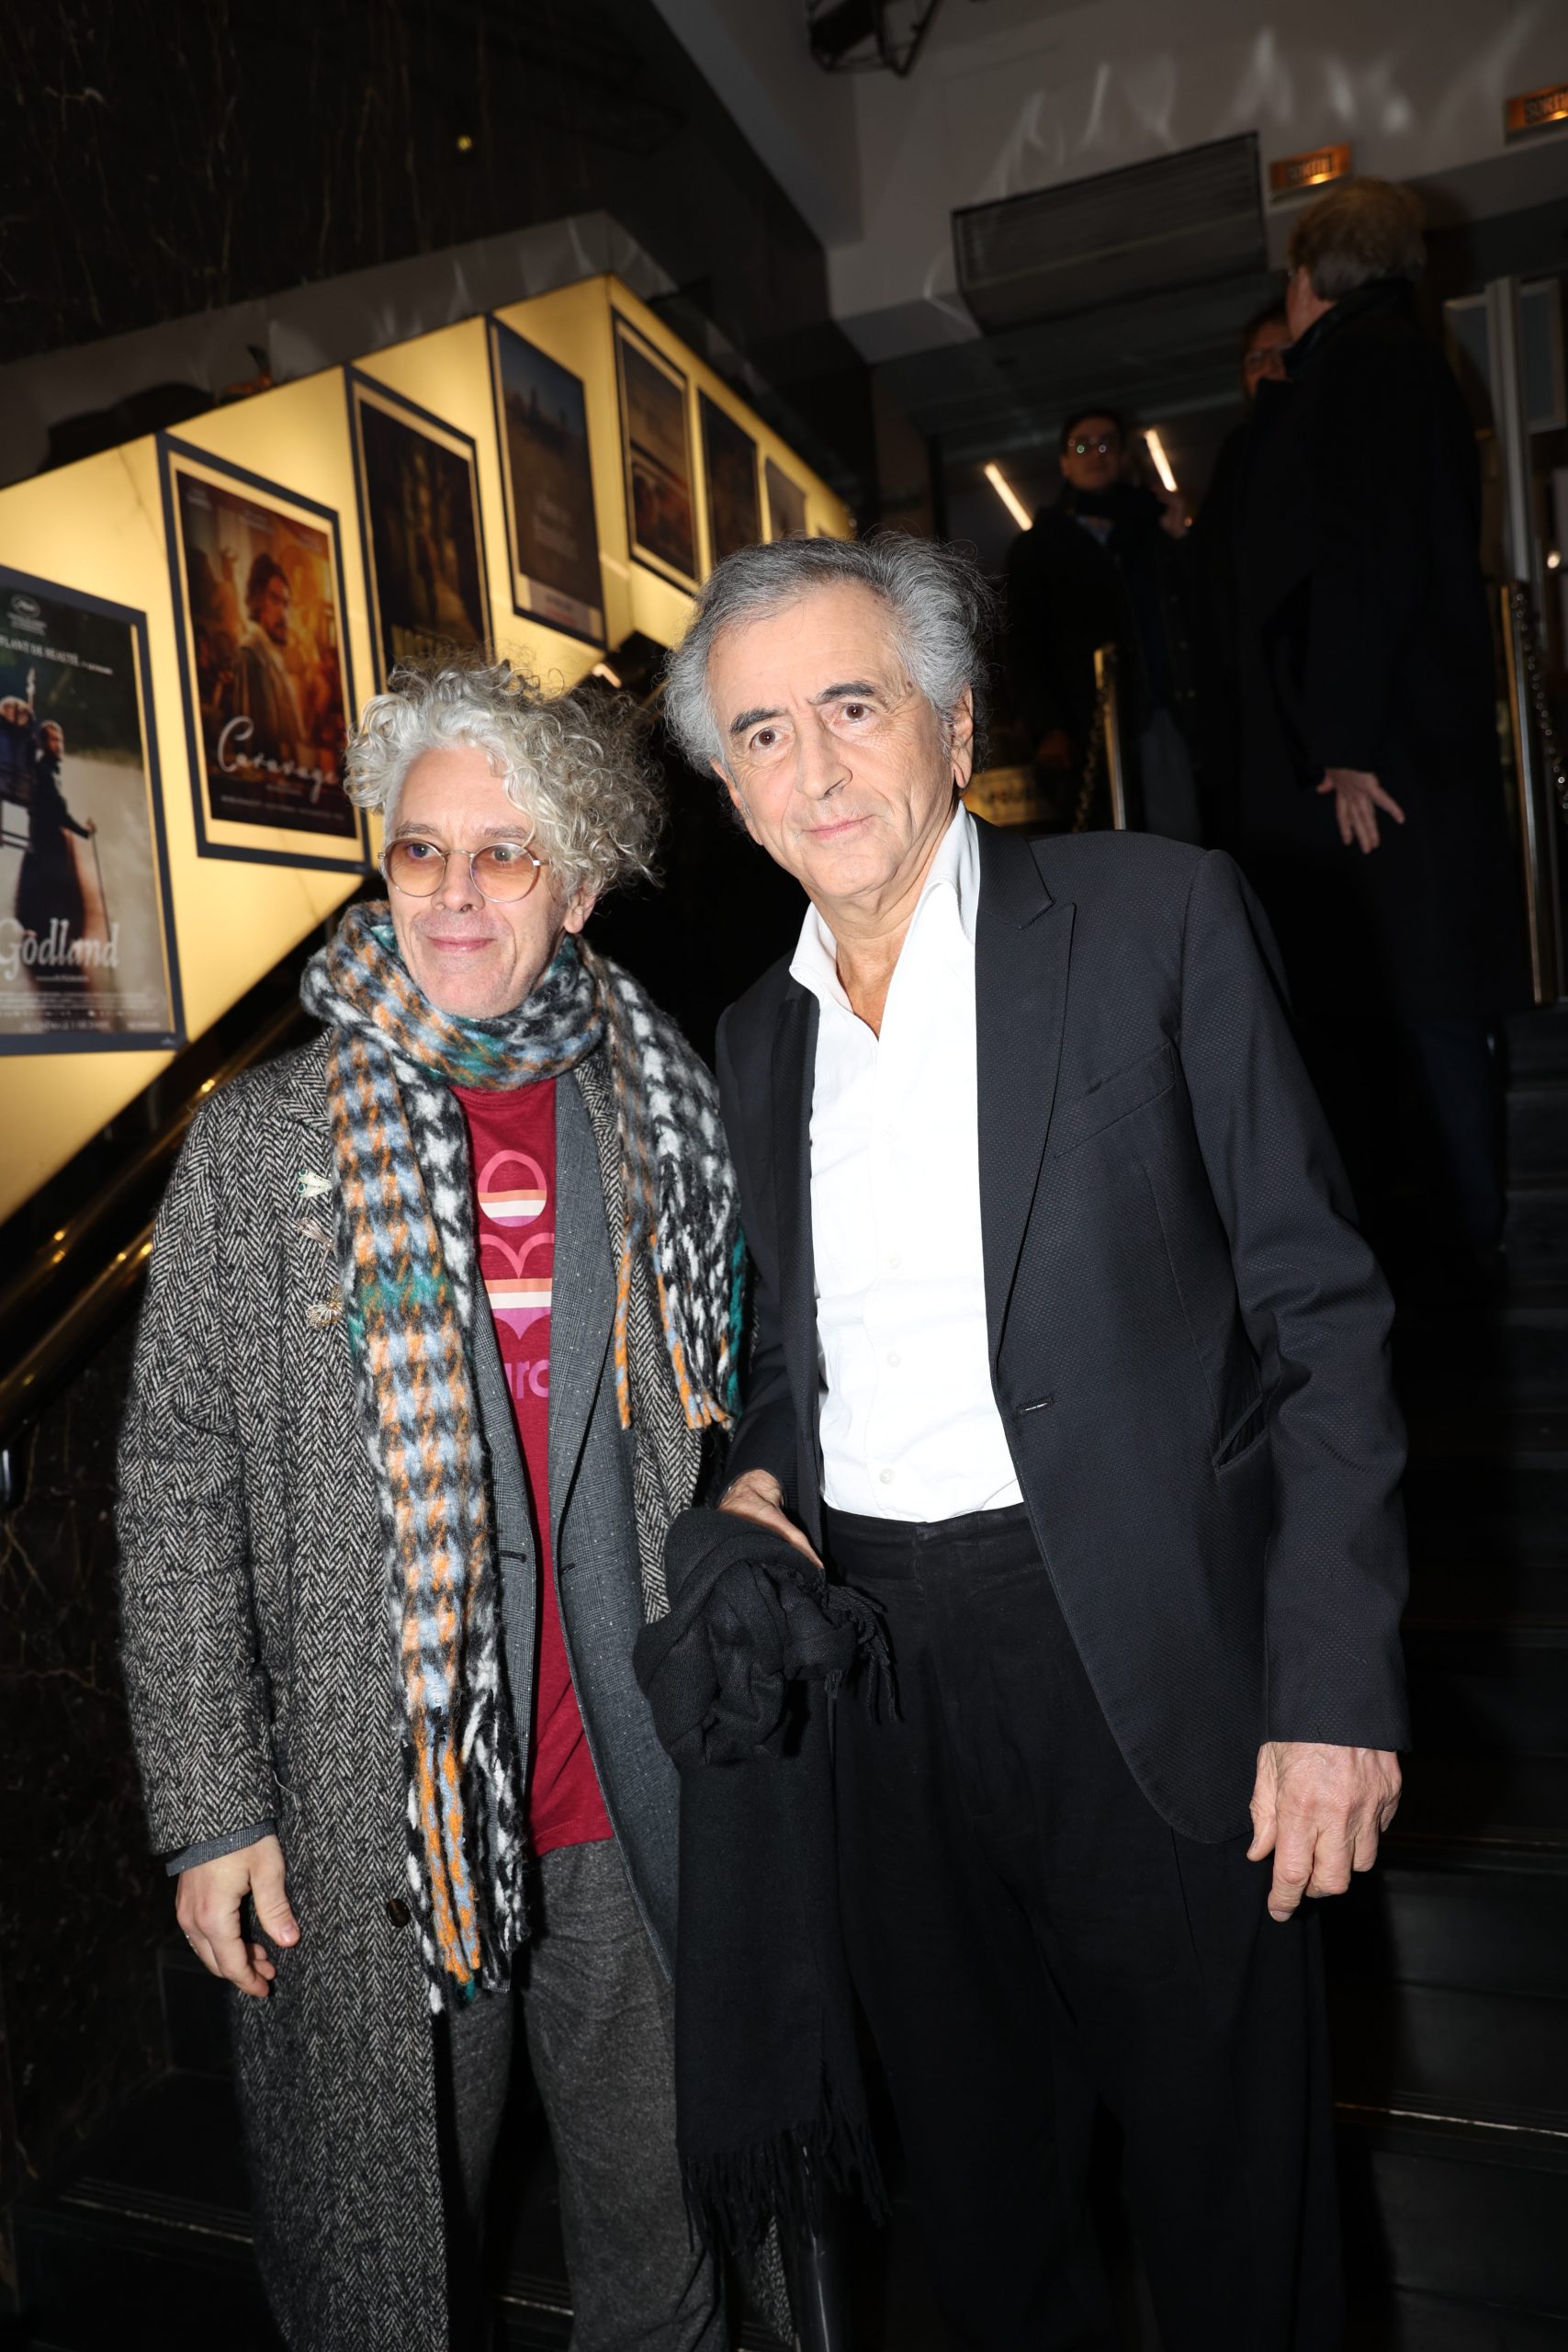 James Thierrée and Bernard-Henri Lévy at the preview of BHL's film "Slava Ukraini" on 6 February 2023 at the Balzac. Photo: Igor Shabalin